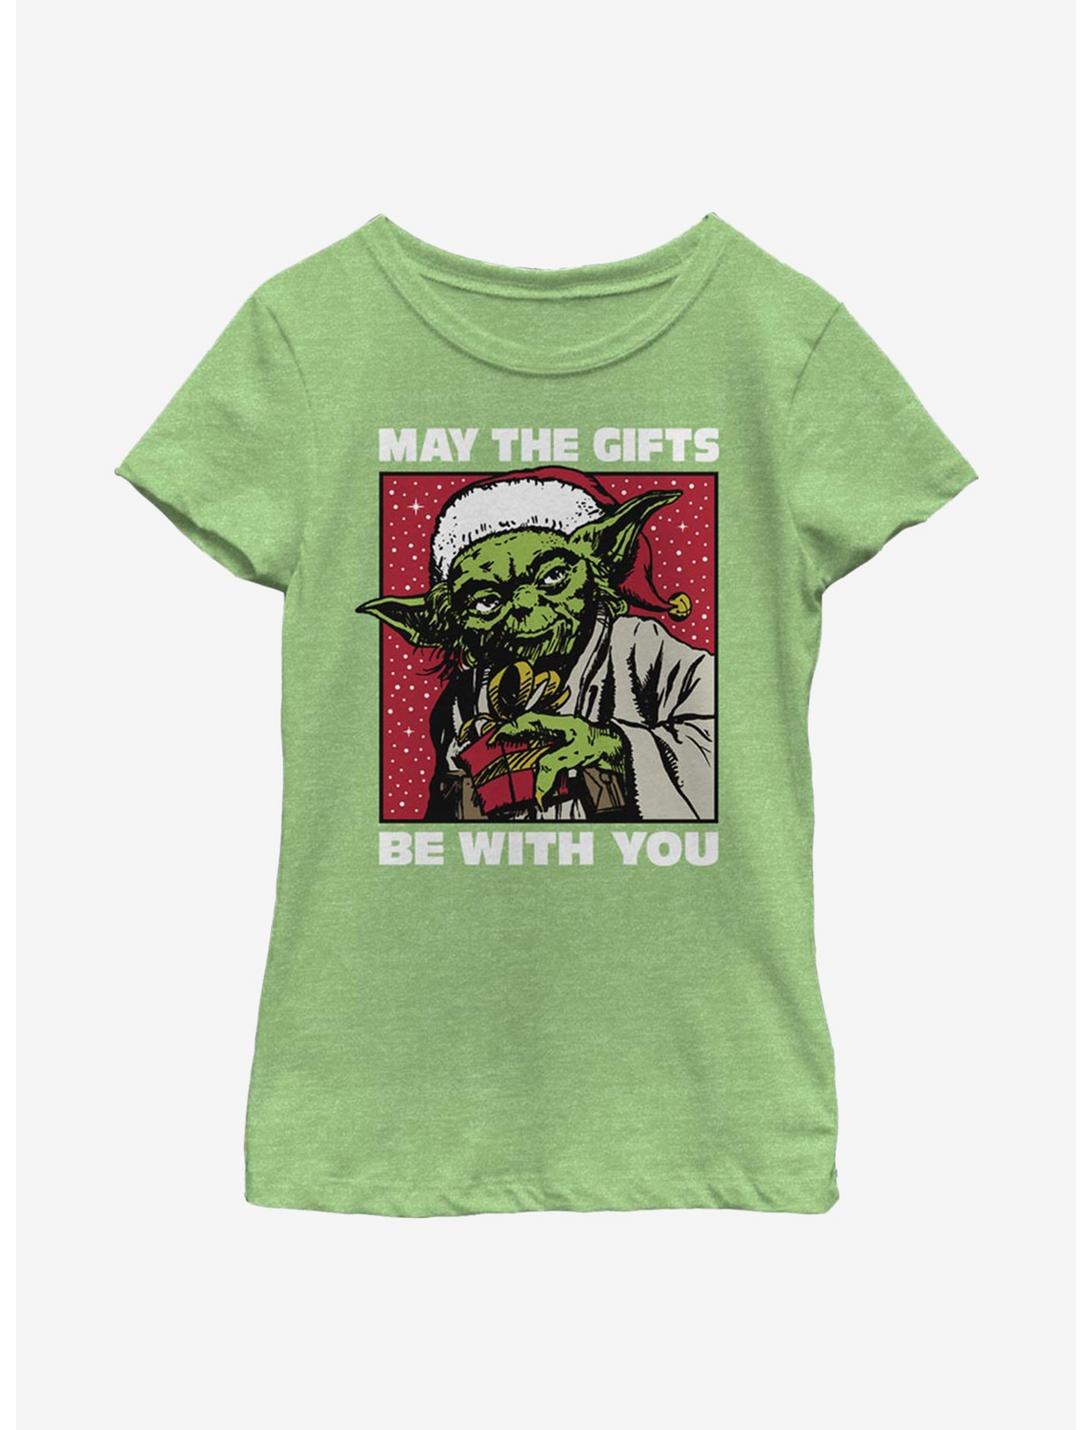 Star Wars Yoda Gifts Youth Girls T-Shirt, GRN APPLE, hi-res